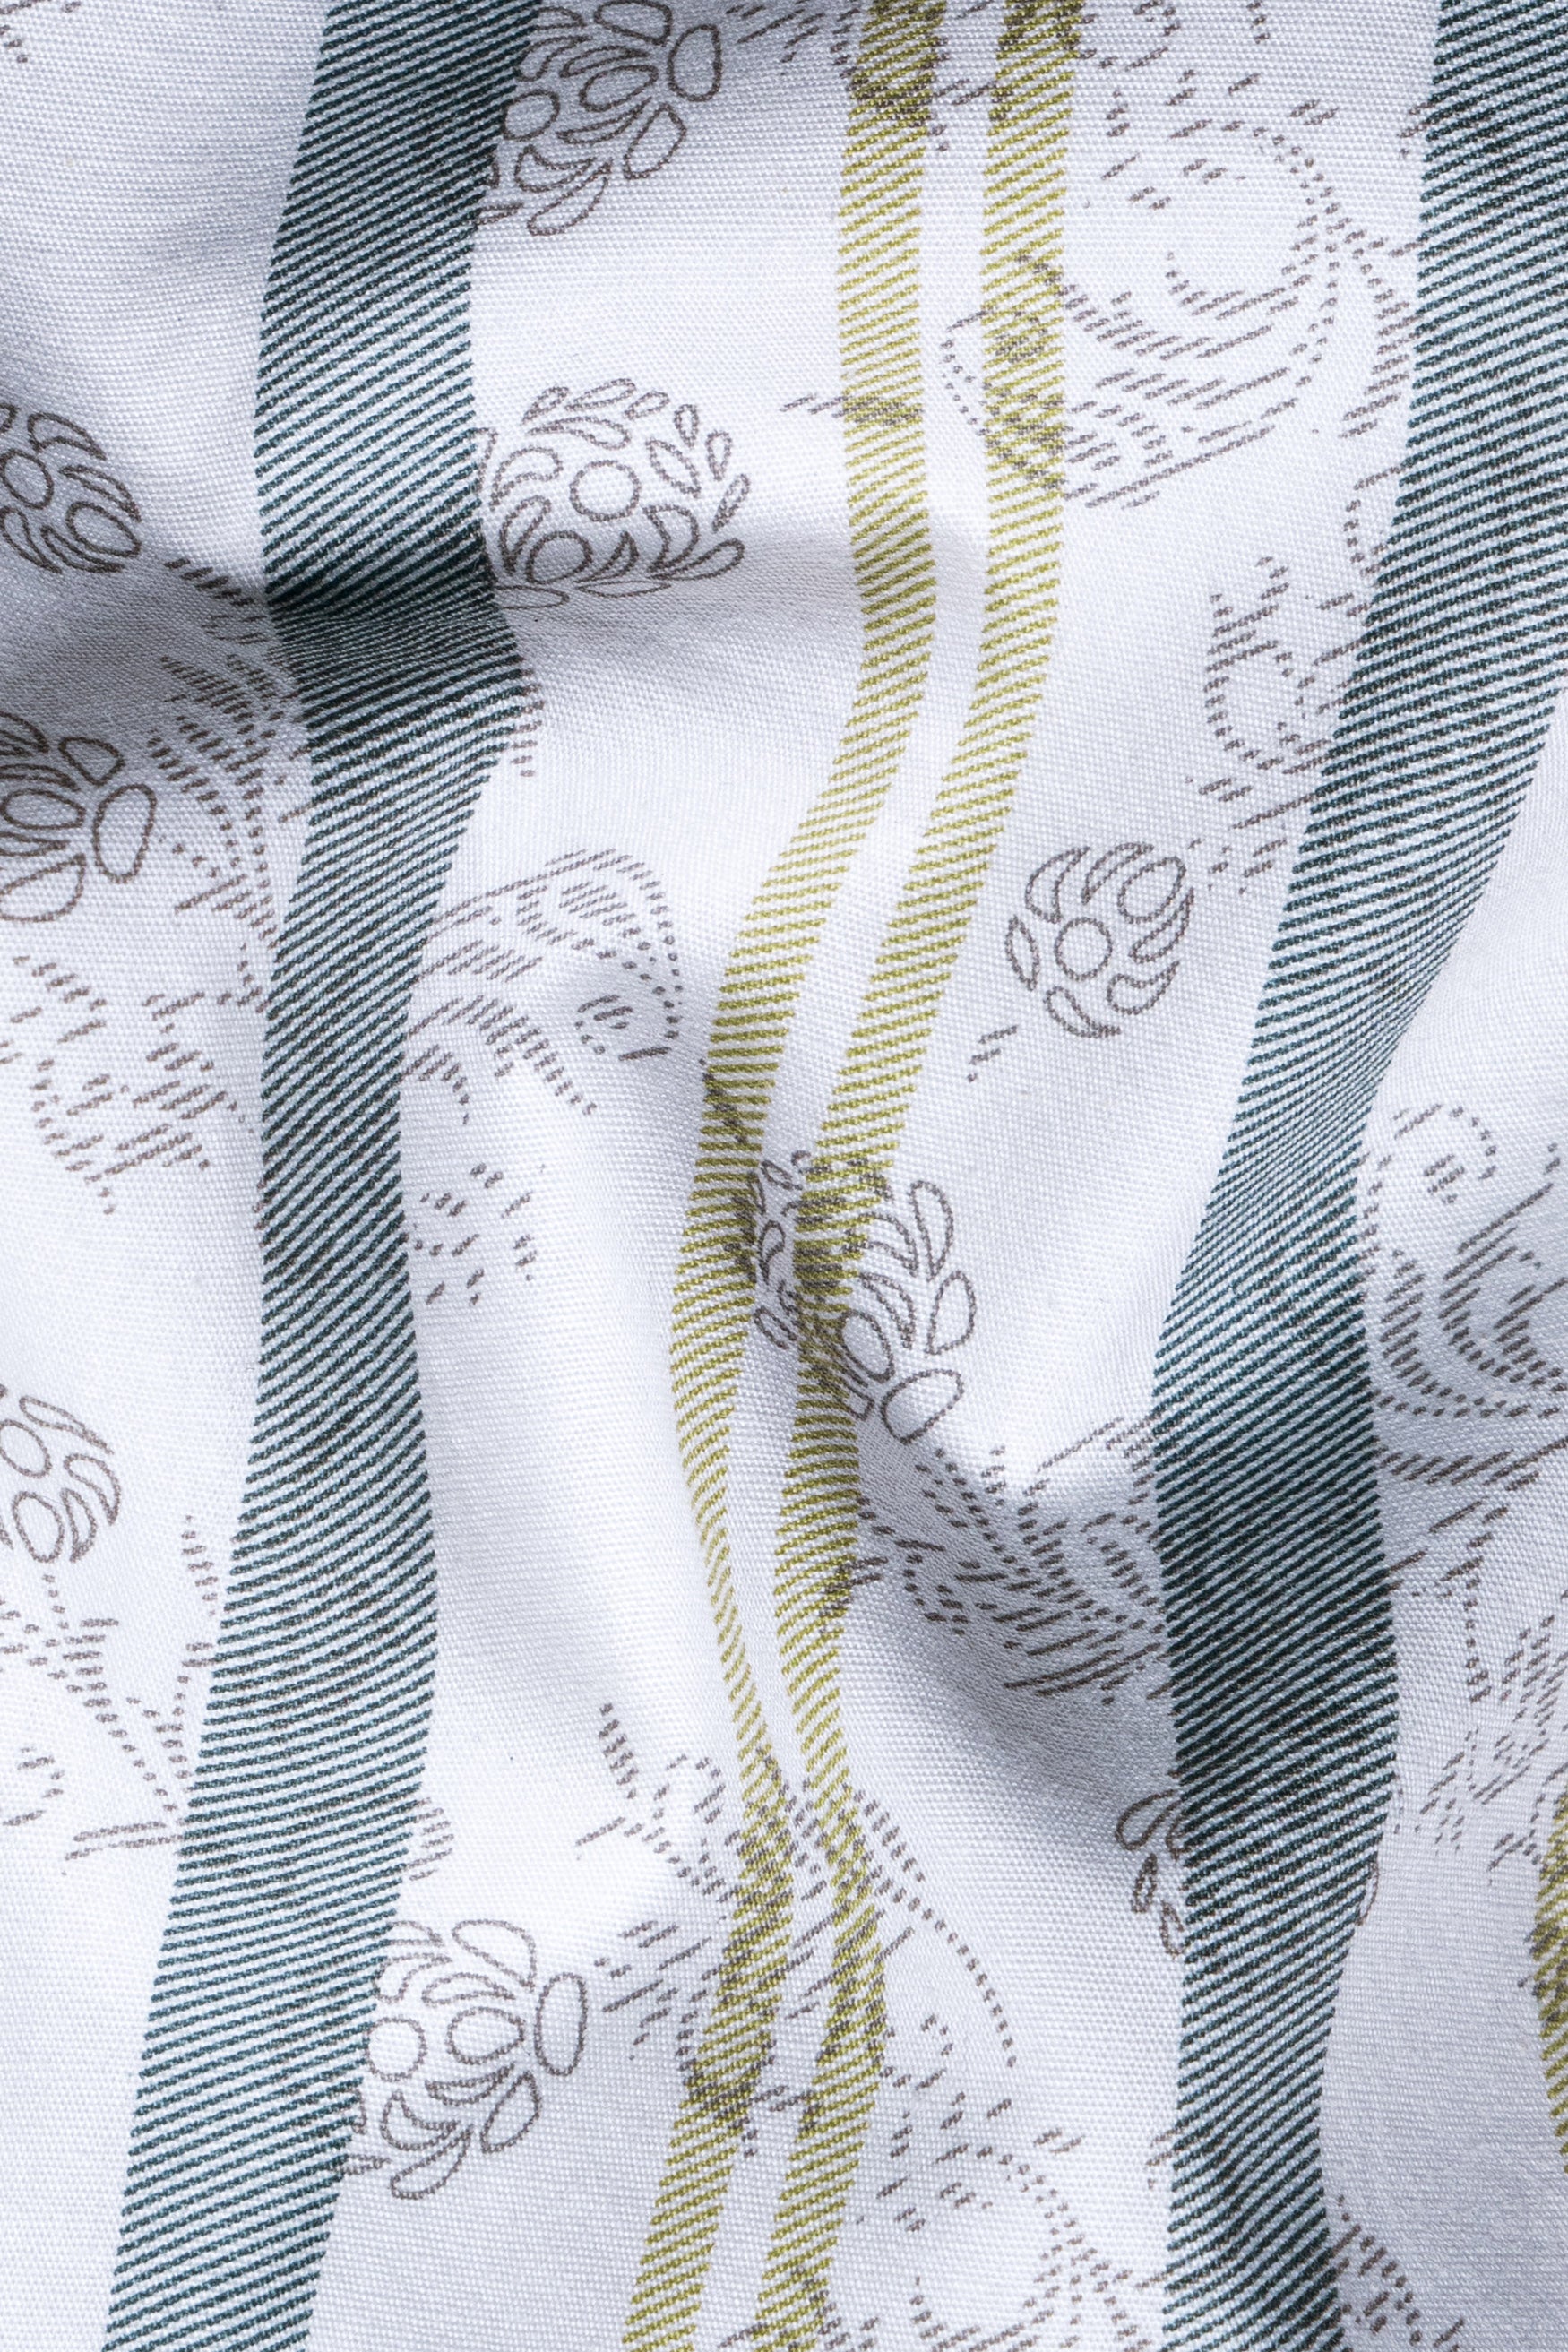 Bright White Multicolour Striped with Floral Printed Subtle Sheen Super Soft Premium Cotton Designer Shirt